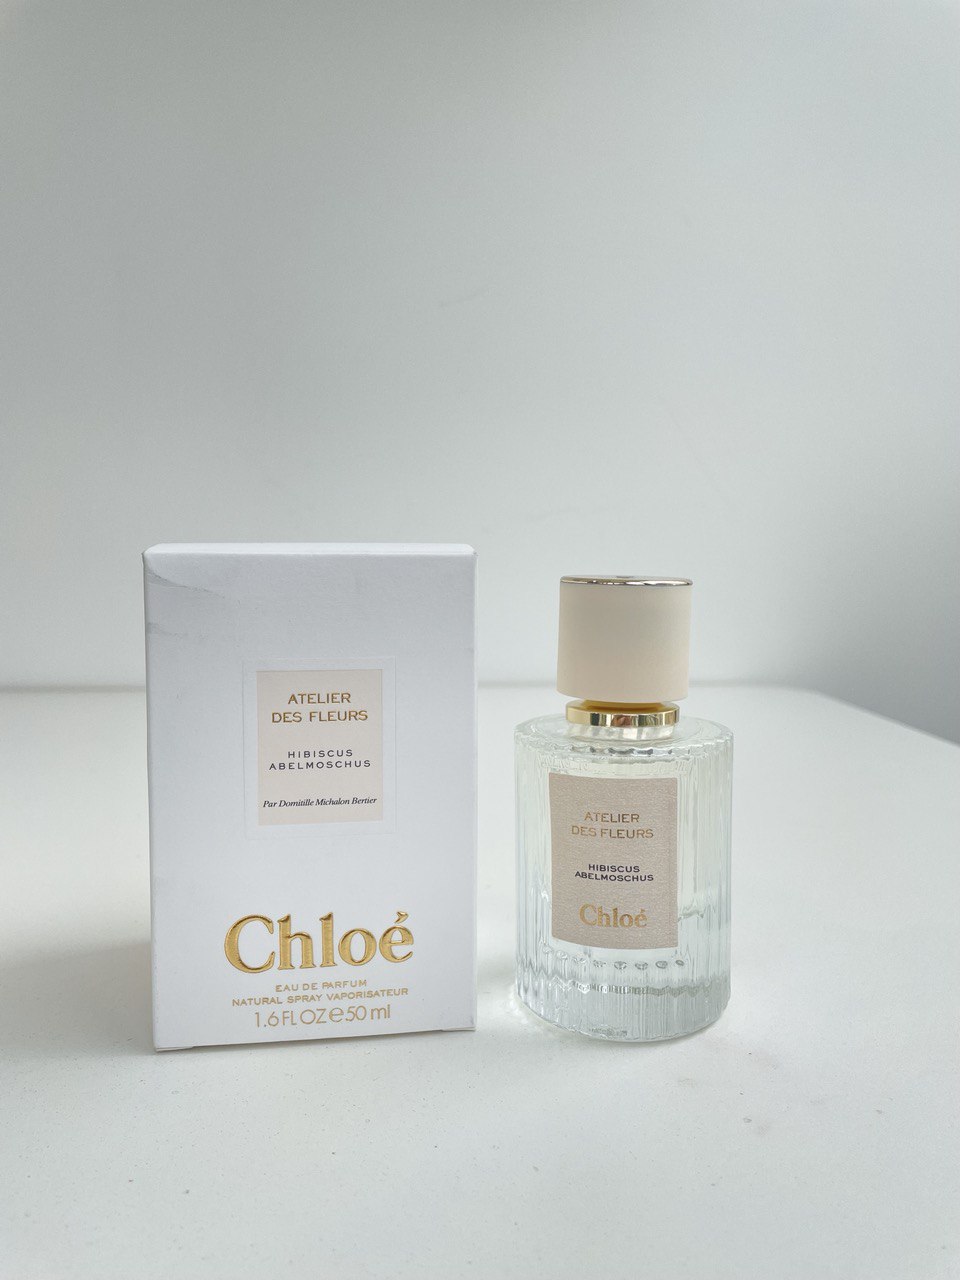 CHLOE ATELIER DES FLEURS- HIBISCUS ABELMOSCHUS EDP 50ML – Perfume